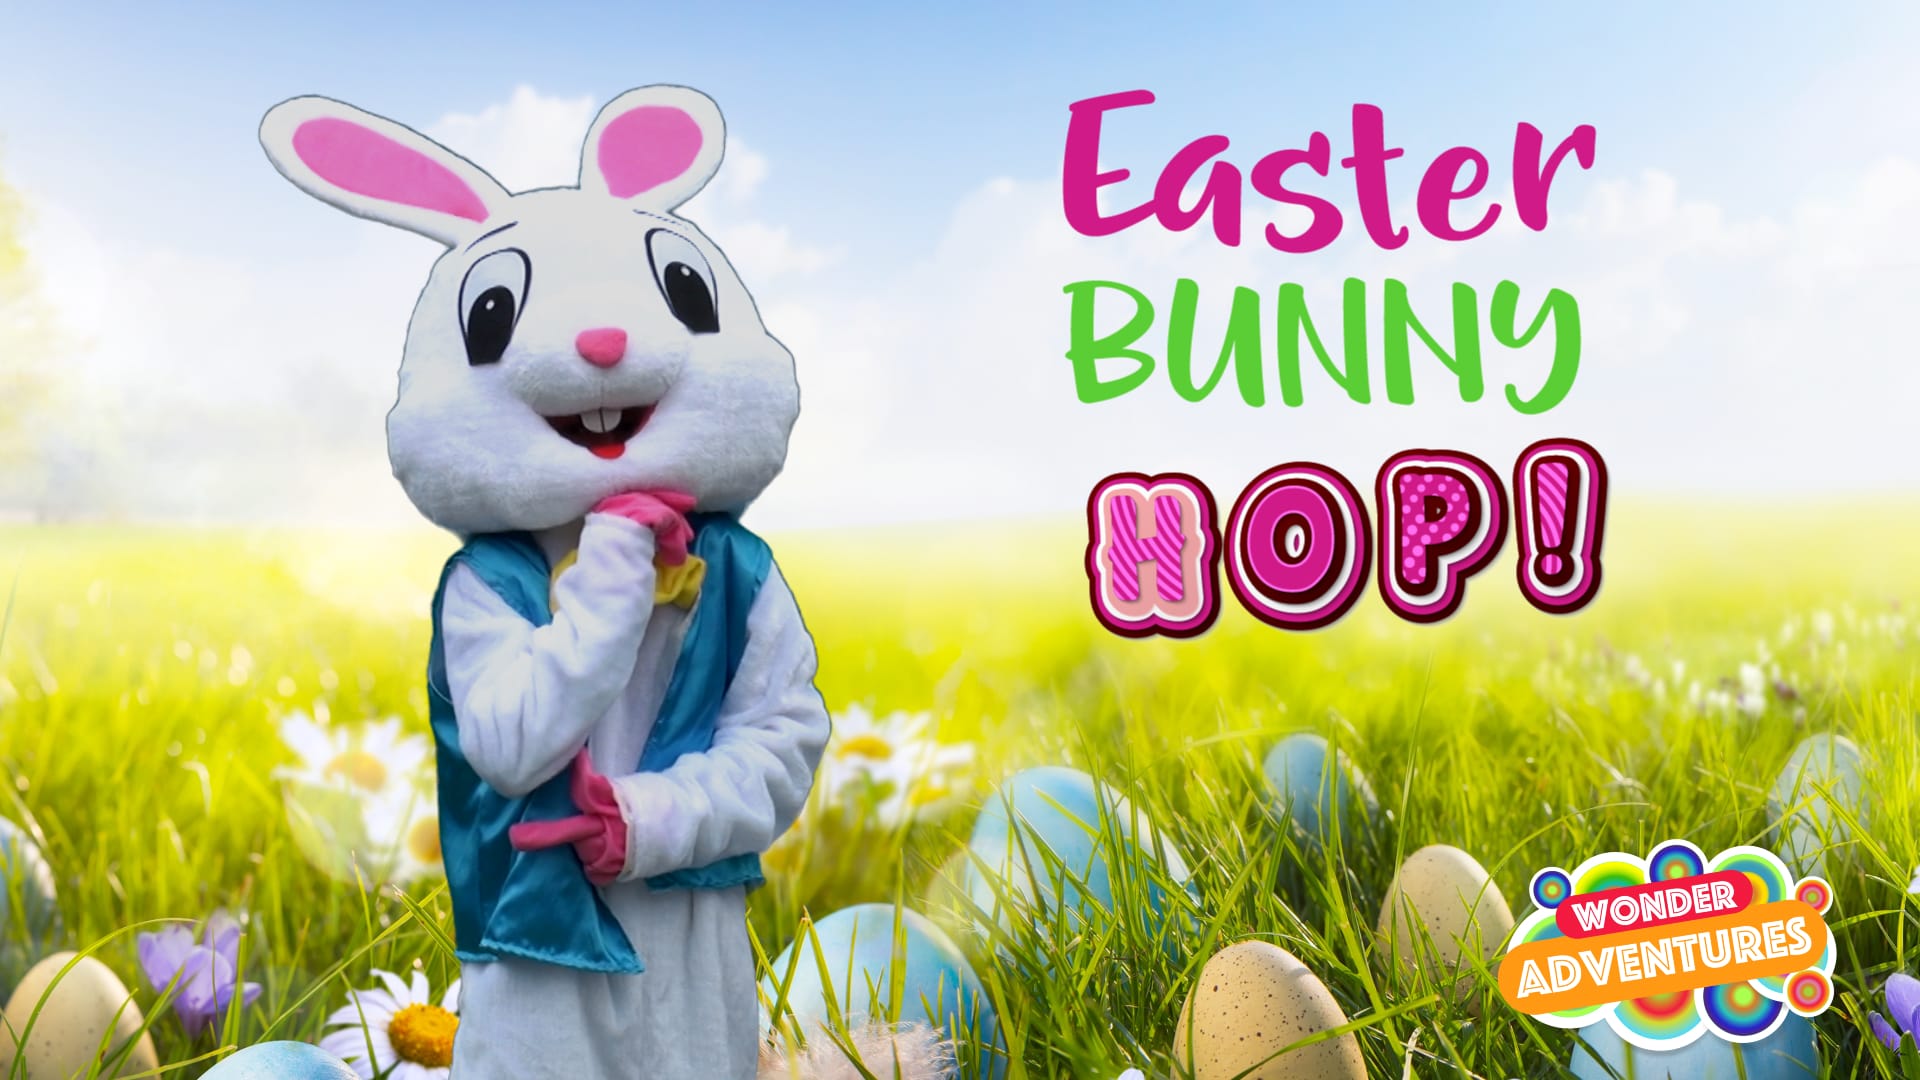 Easter Bunny Hop kids song for easter